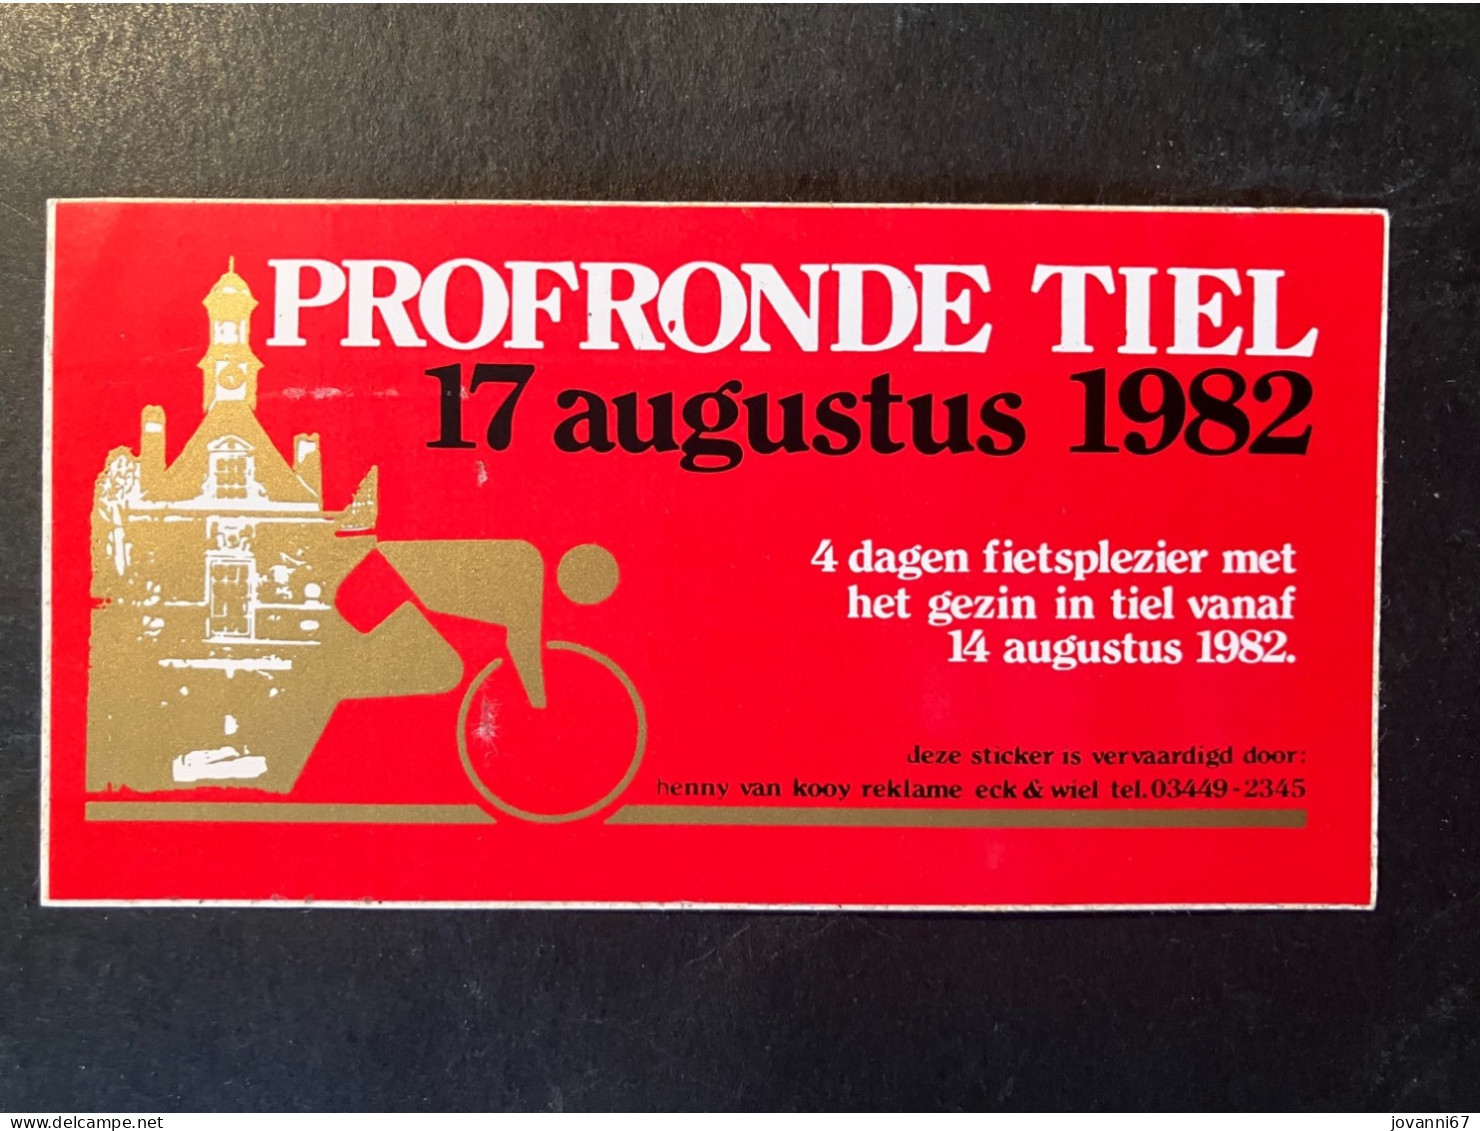 Profronde Tiel - Sticker - Cyclisme - Ciclismo -wielrennen - Cycling